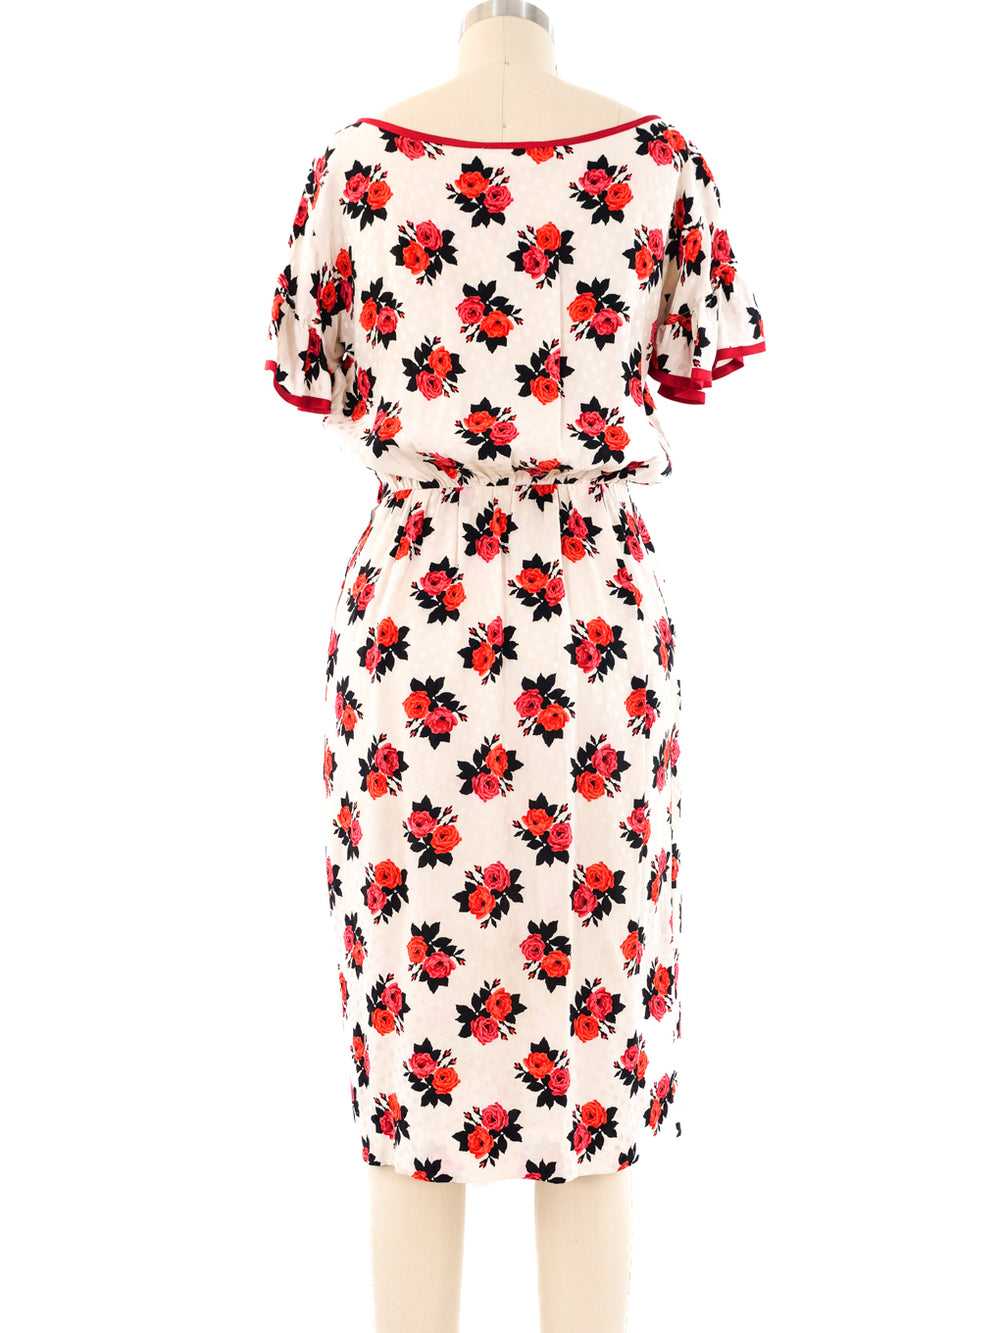 Yves Saint Laurent Rose Printed Silk Dress - image 4